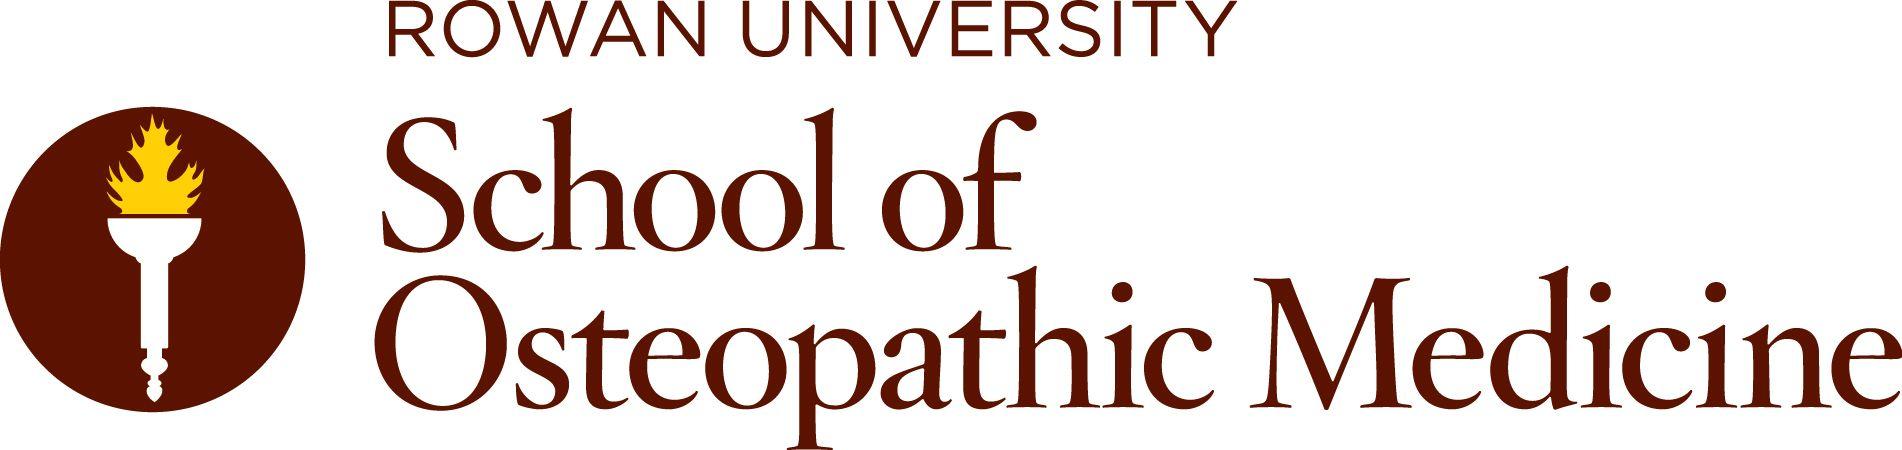 Rowan U Logo - Home University School of Osteopathic Medicine